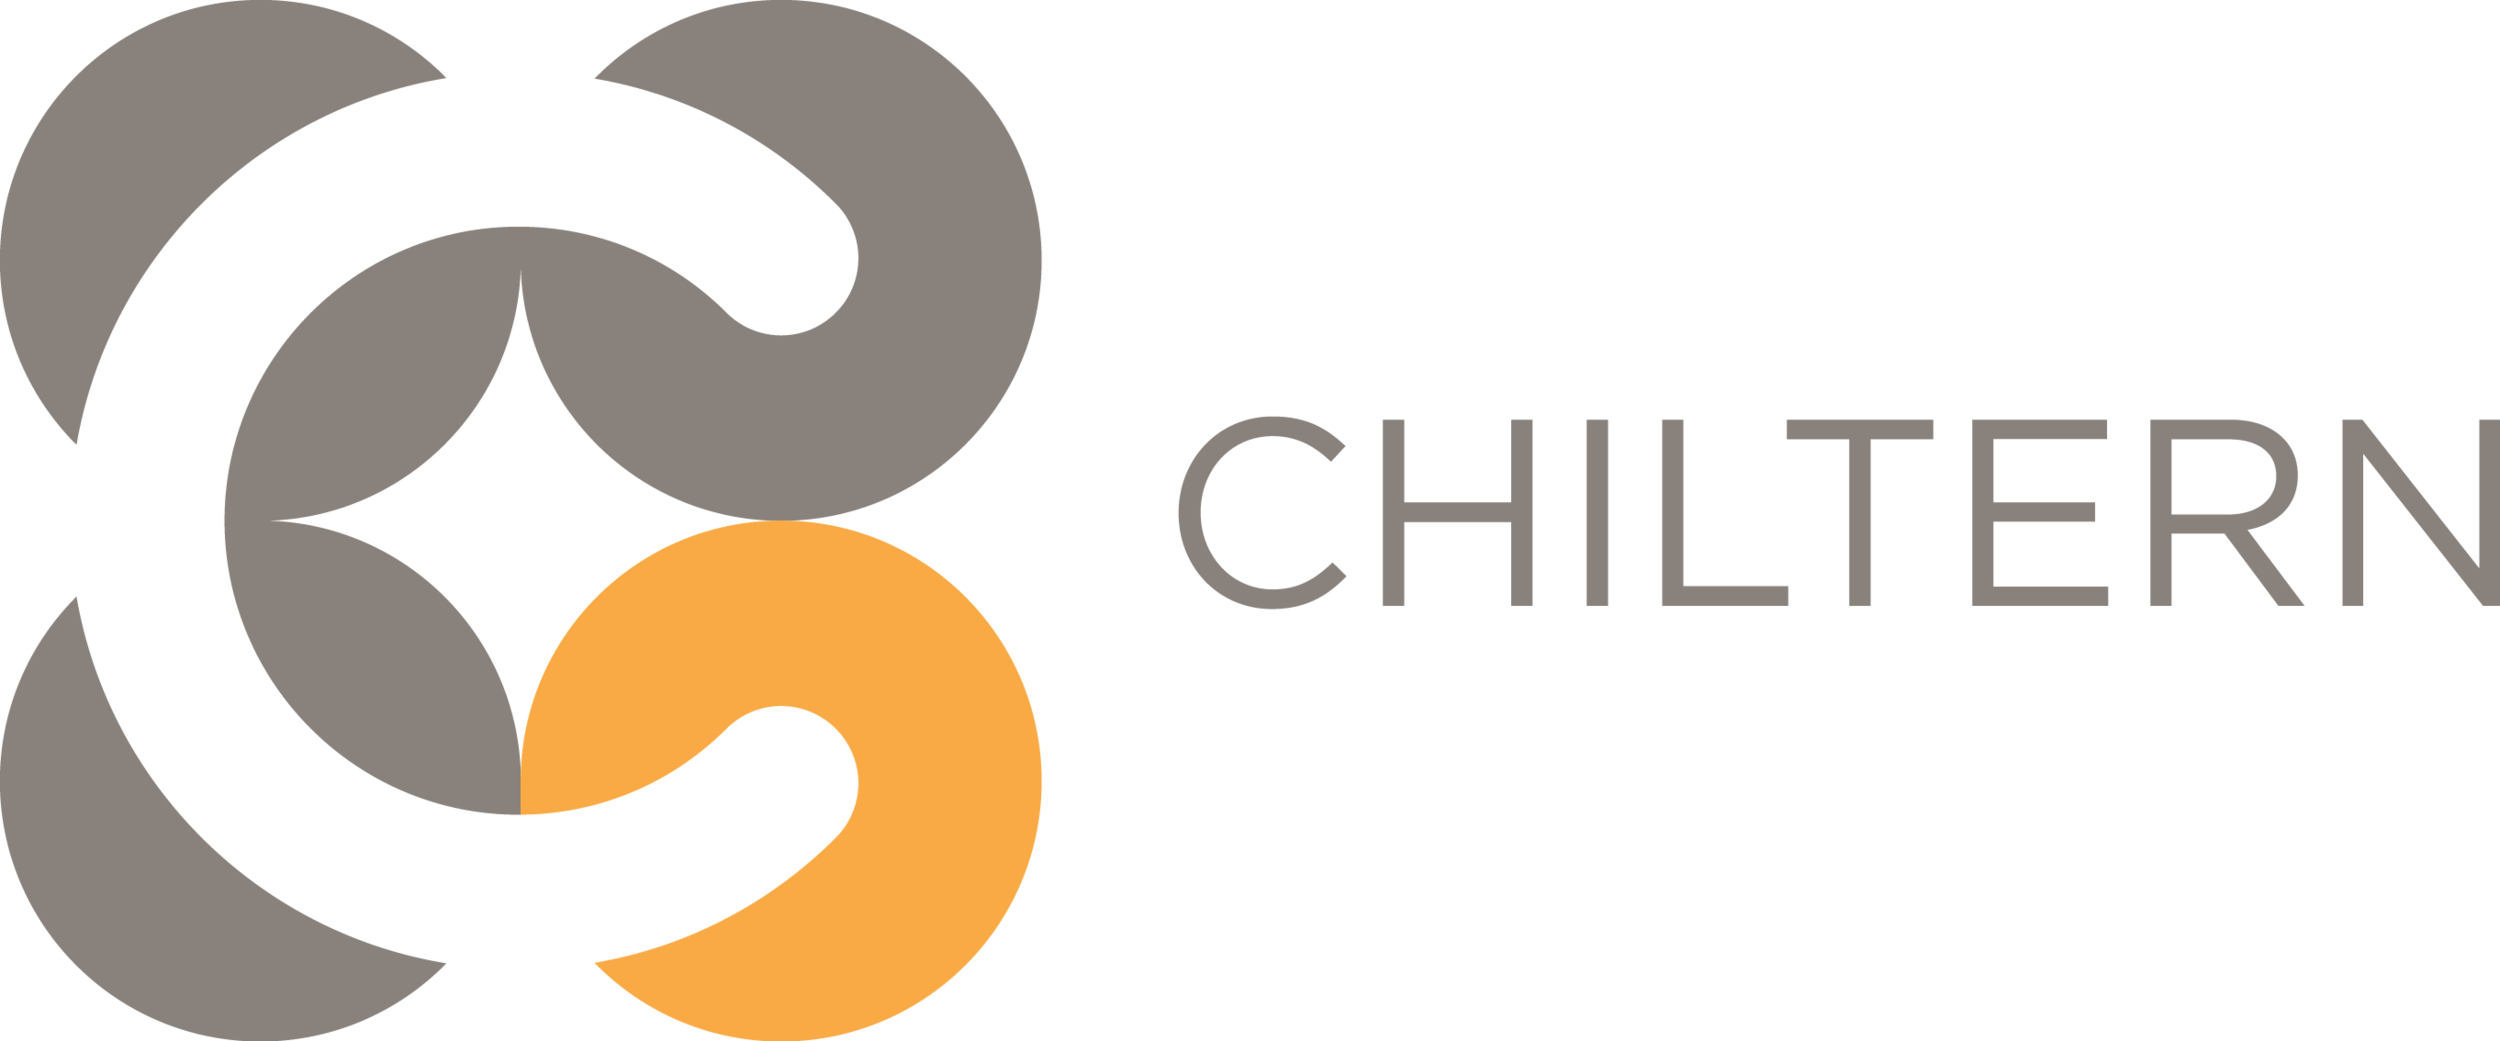 Chiltern-Logo-Horz_RGB.png